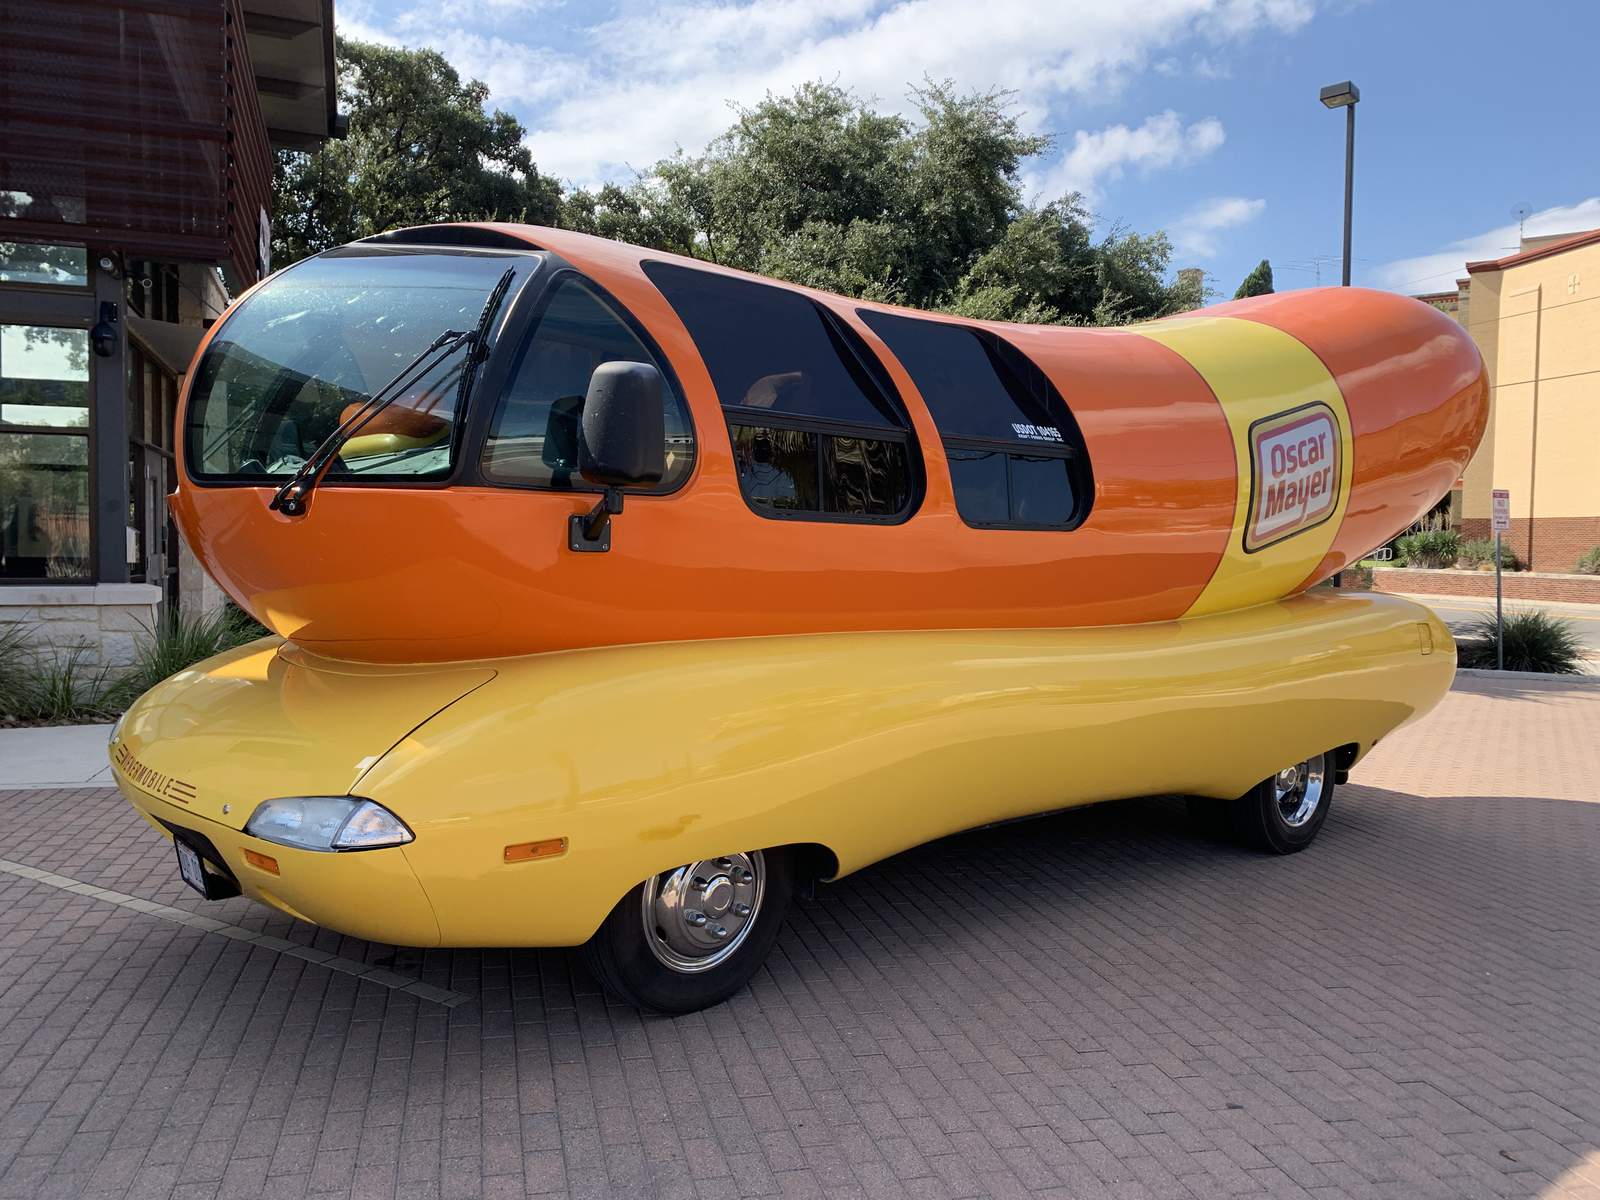 Oscar Mayer hiring team to drive Wienermobile across US